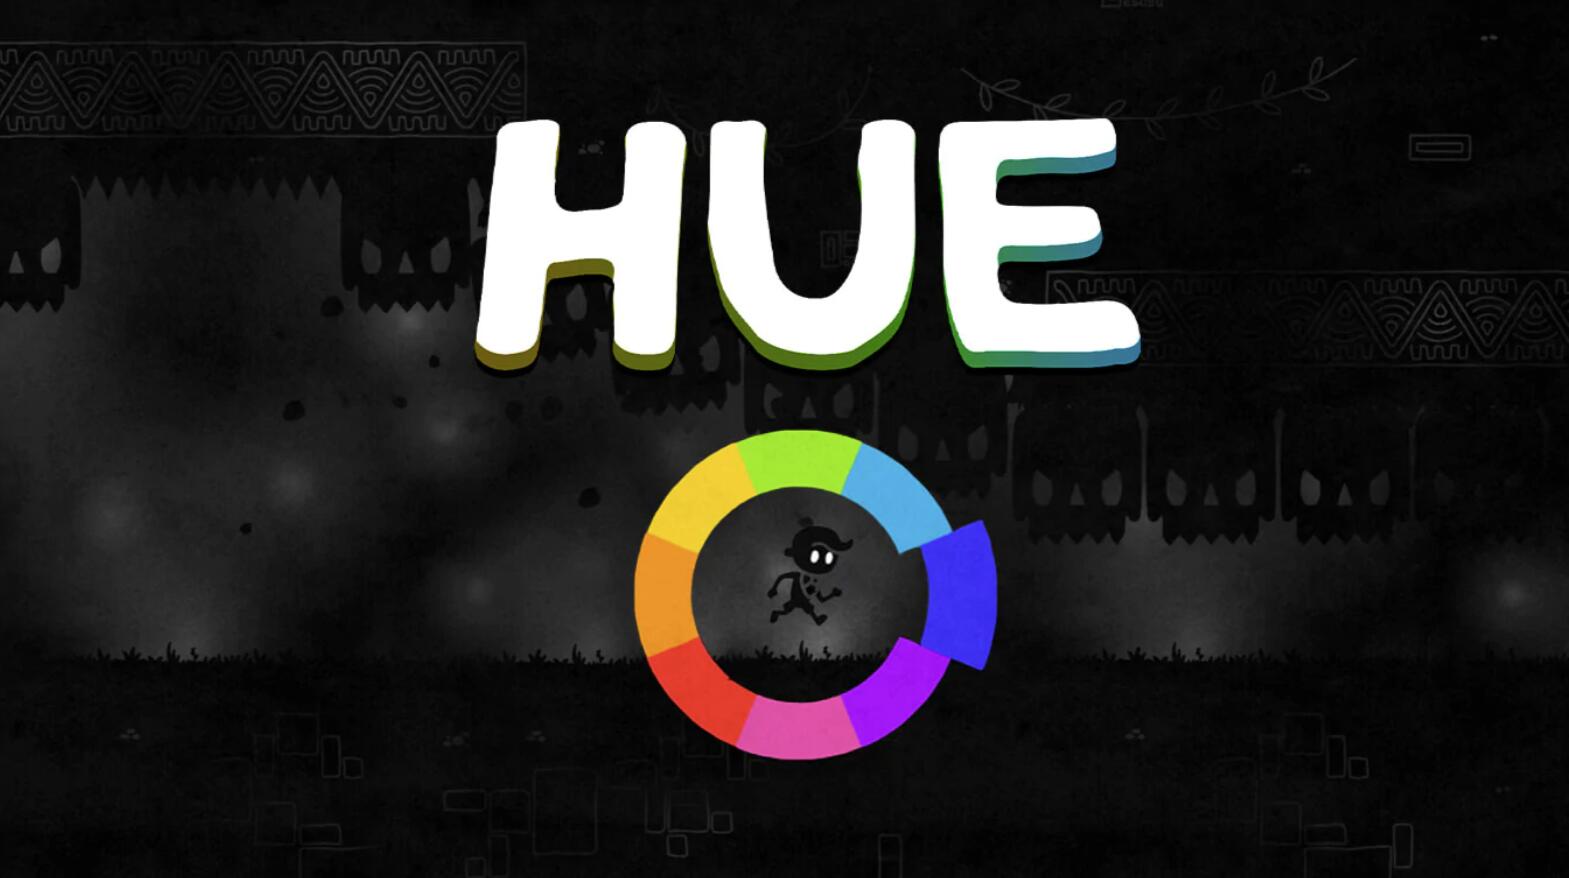 Epic本周喜加一游戏更新 暂时为《Hue》